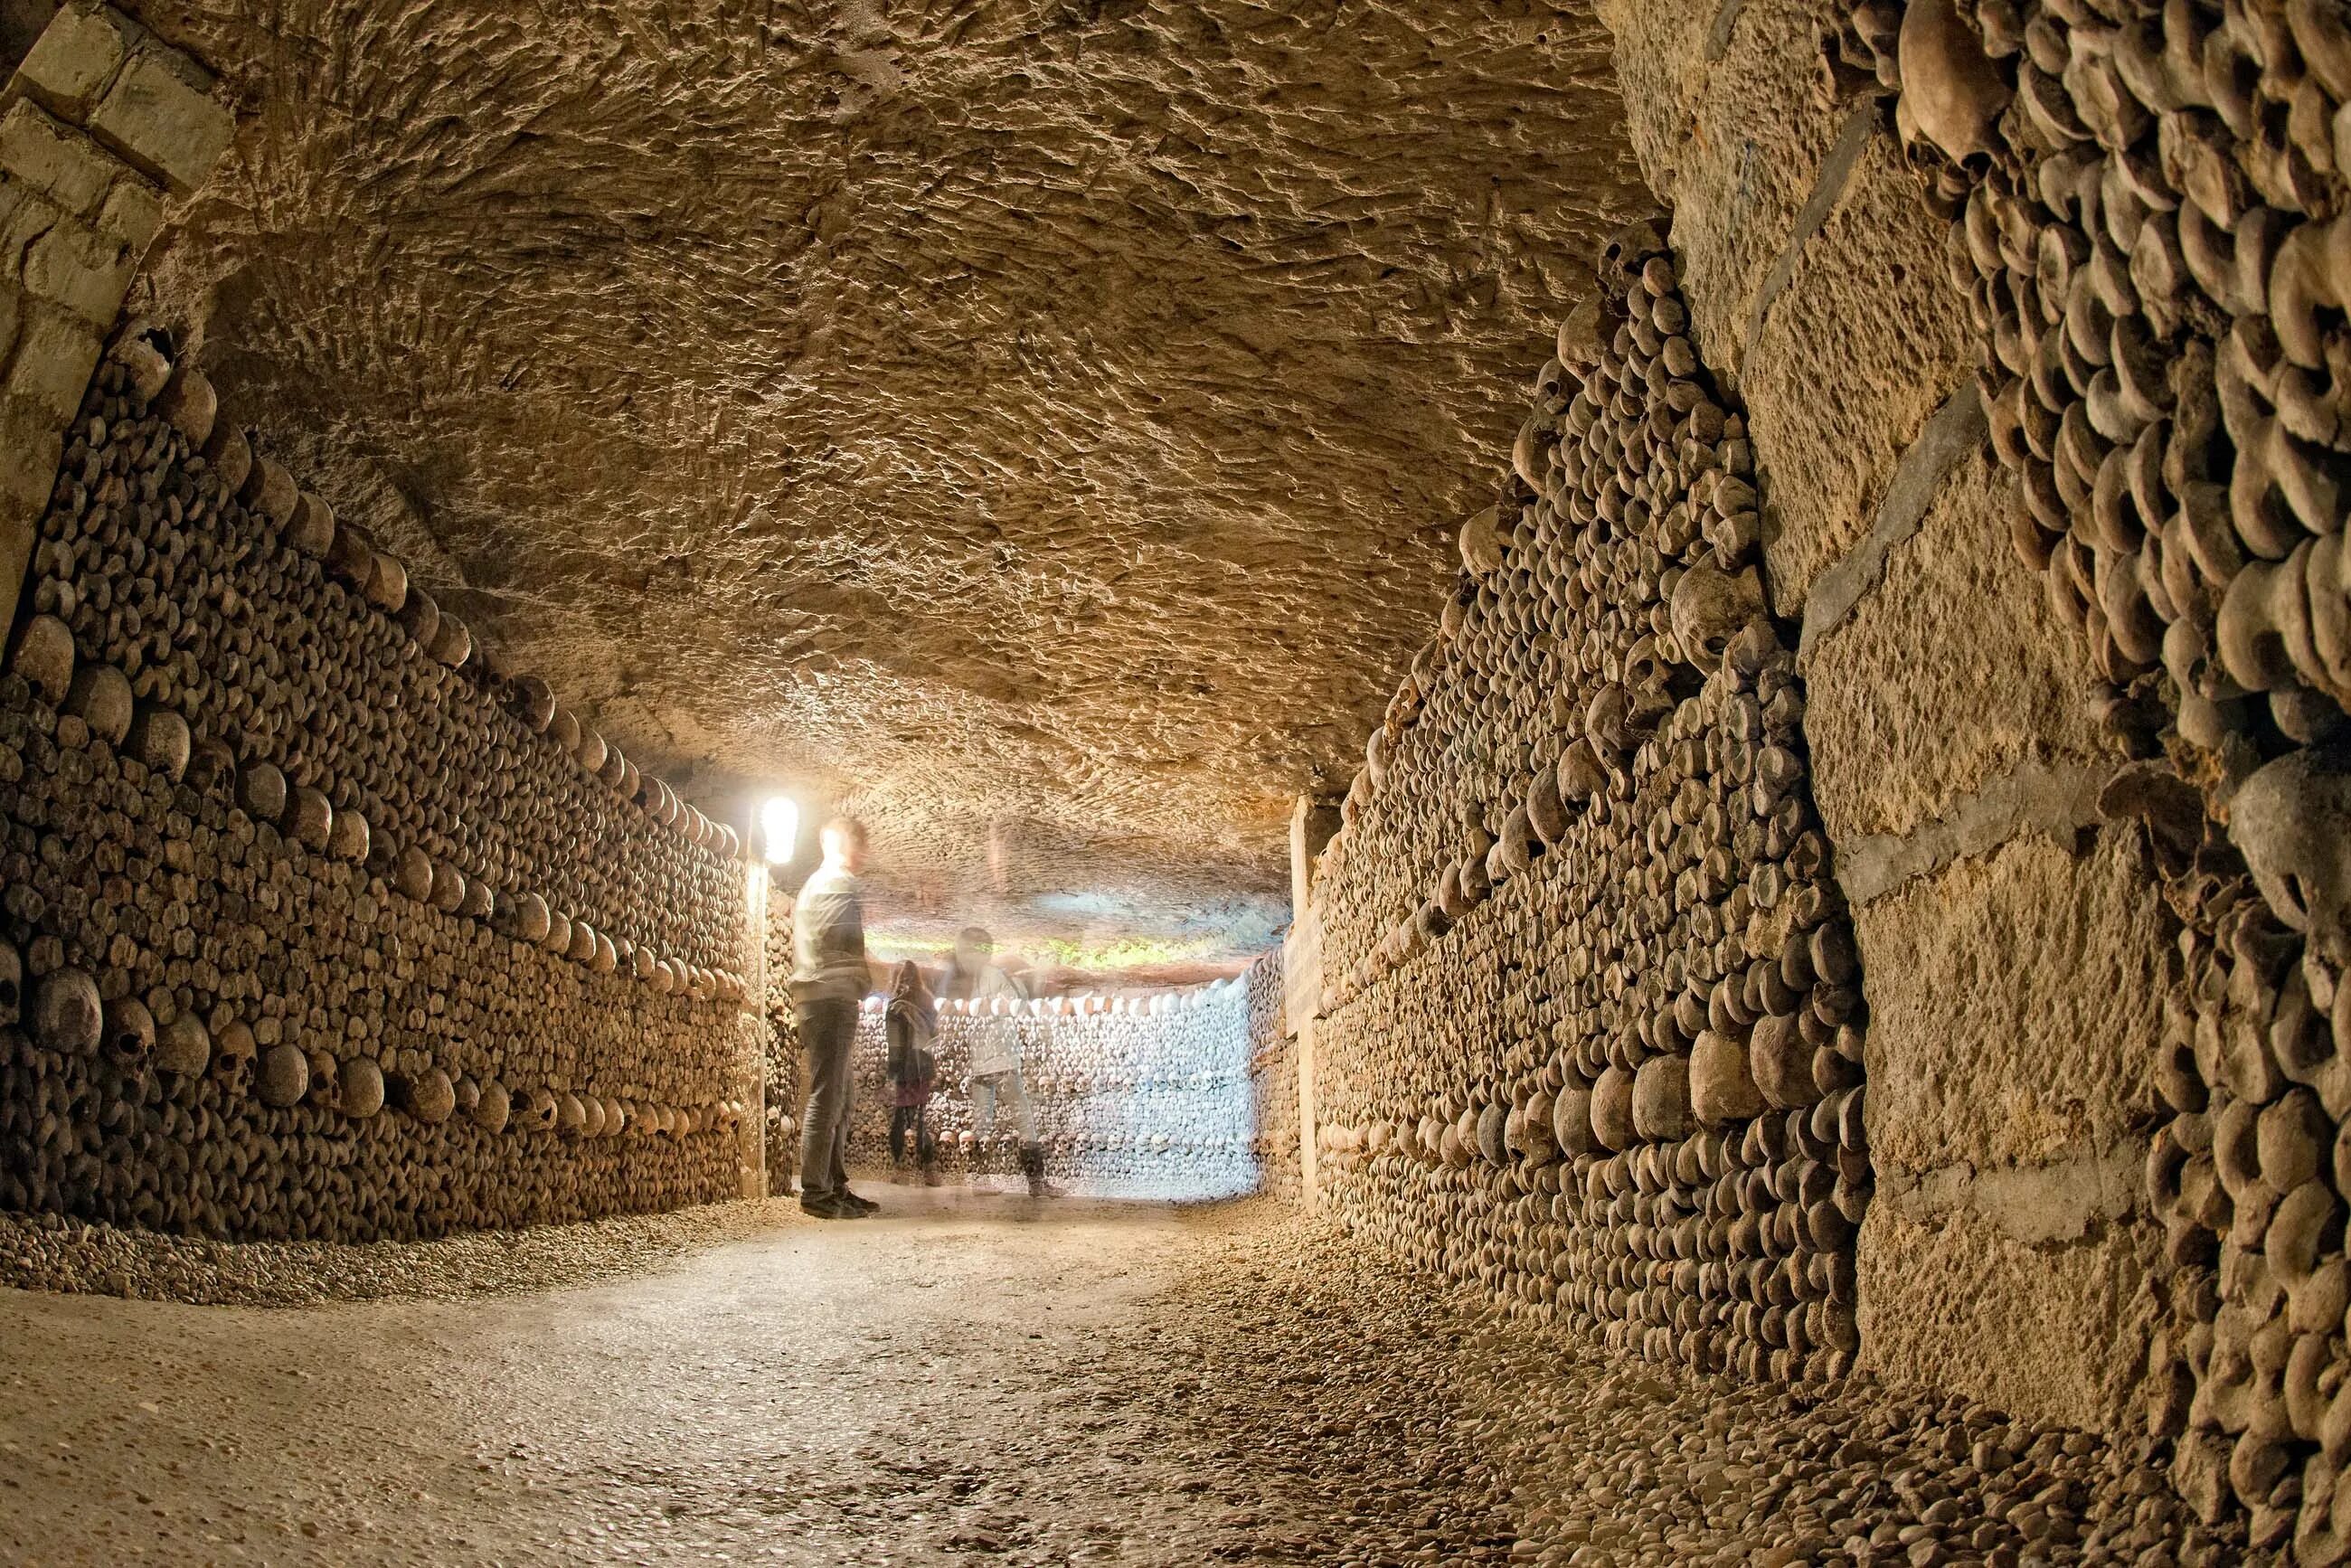 The catacombs of solaris revisited. Подземные катакомбы Парижа. Соледар катакомбы. Французские катакомбы.